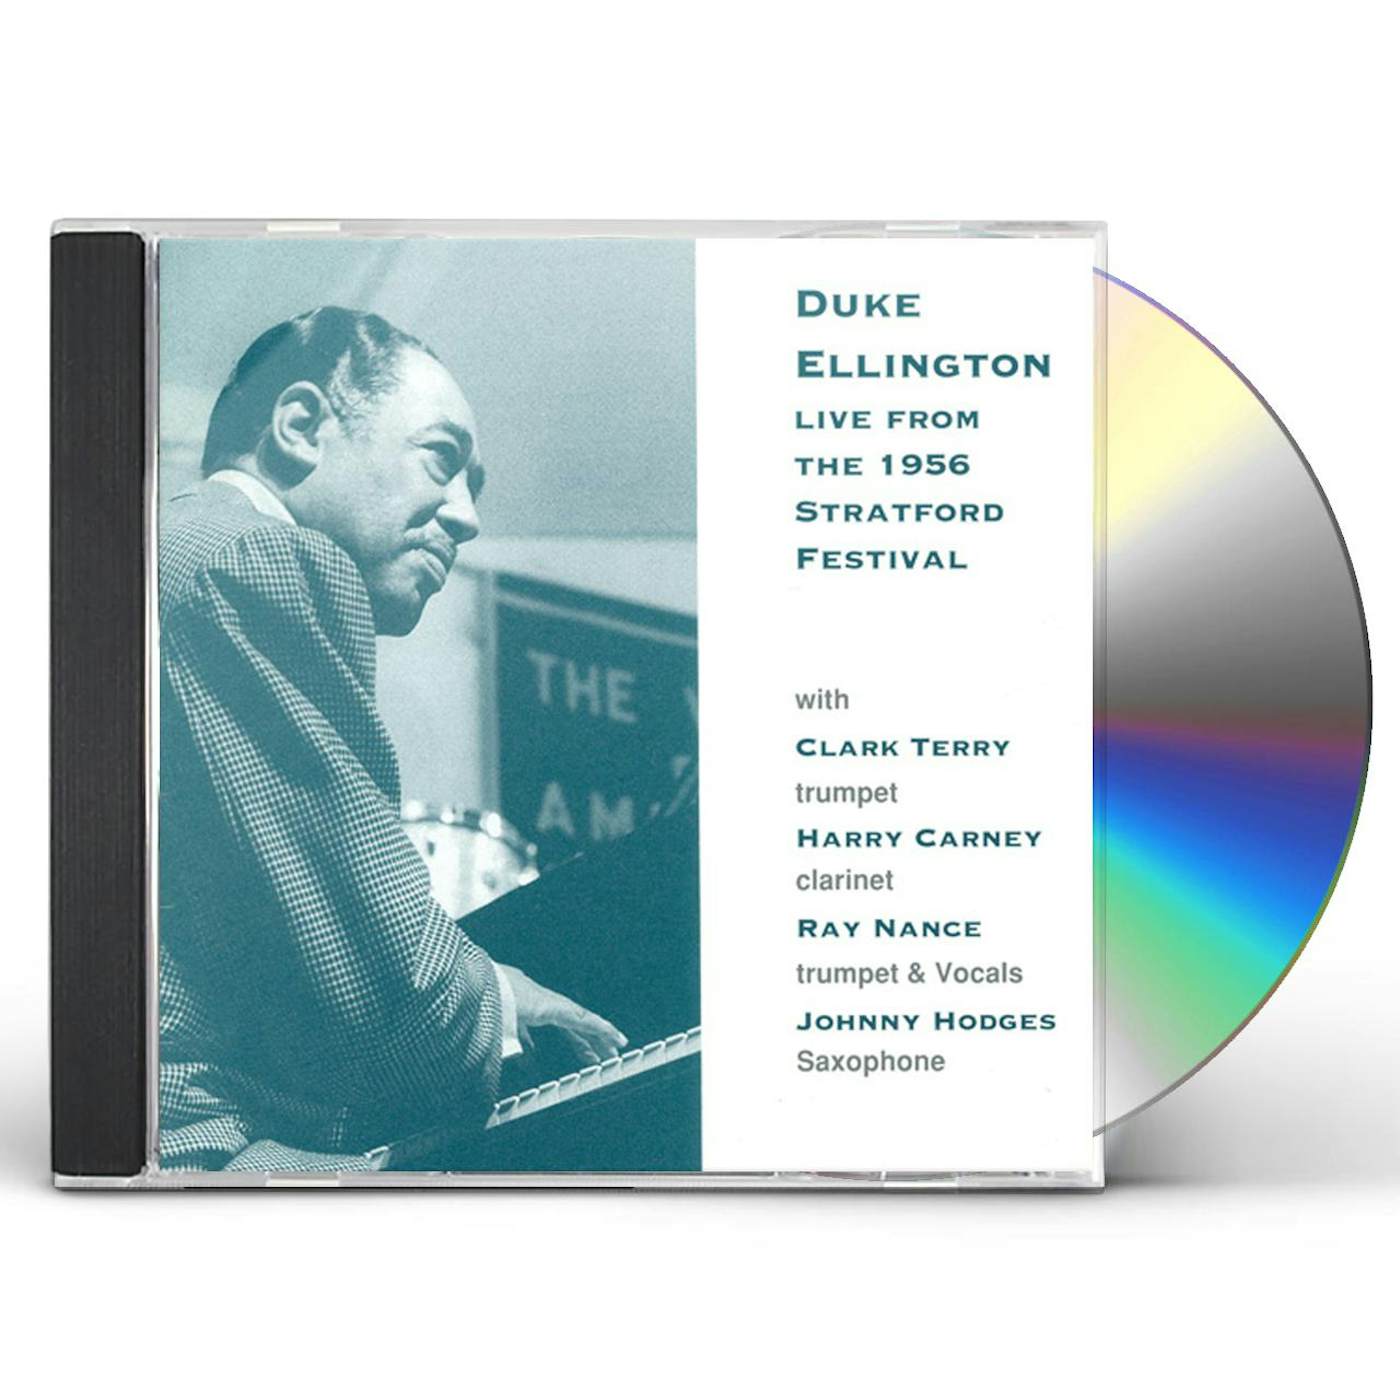 Duke Ellington LIVE AT THE 1956 STRATFORD FESTIVAL CD